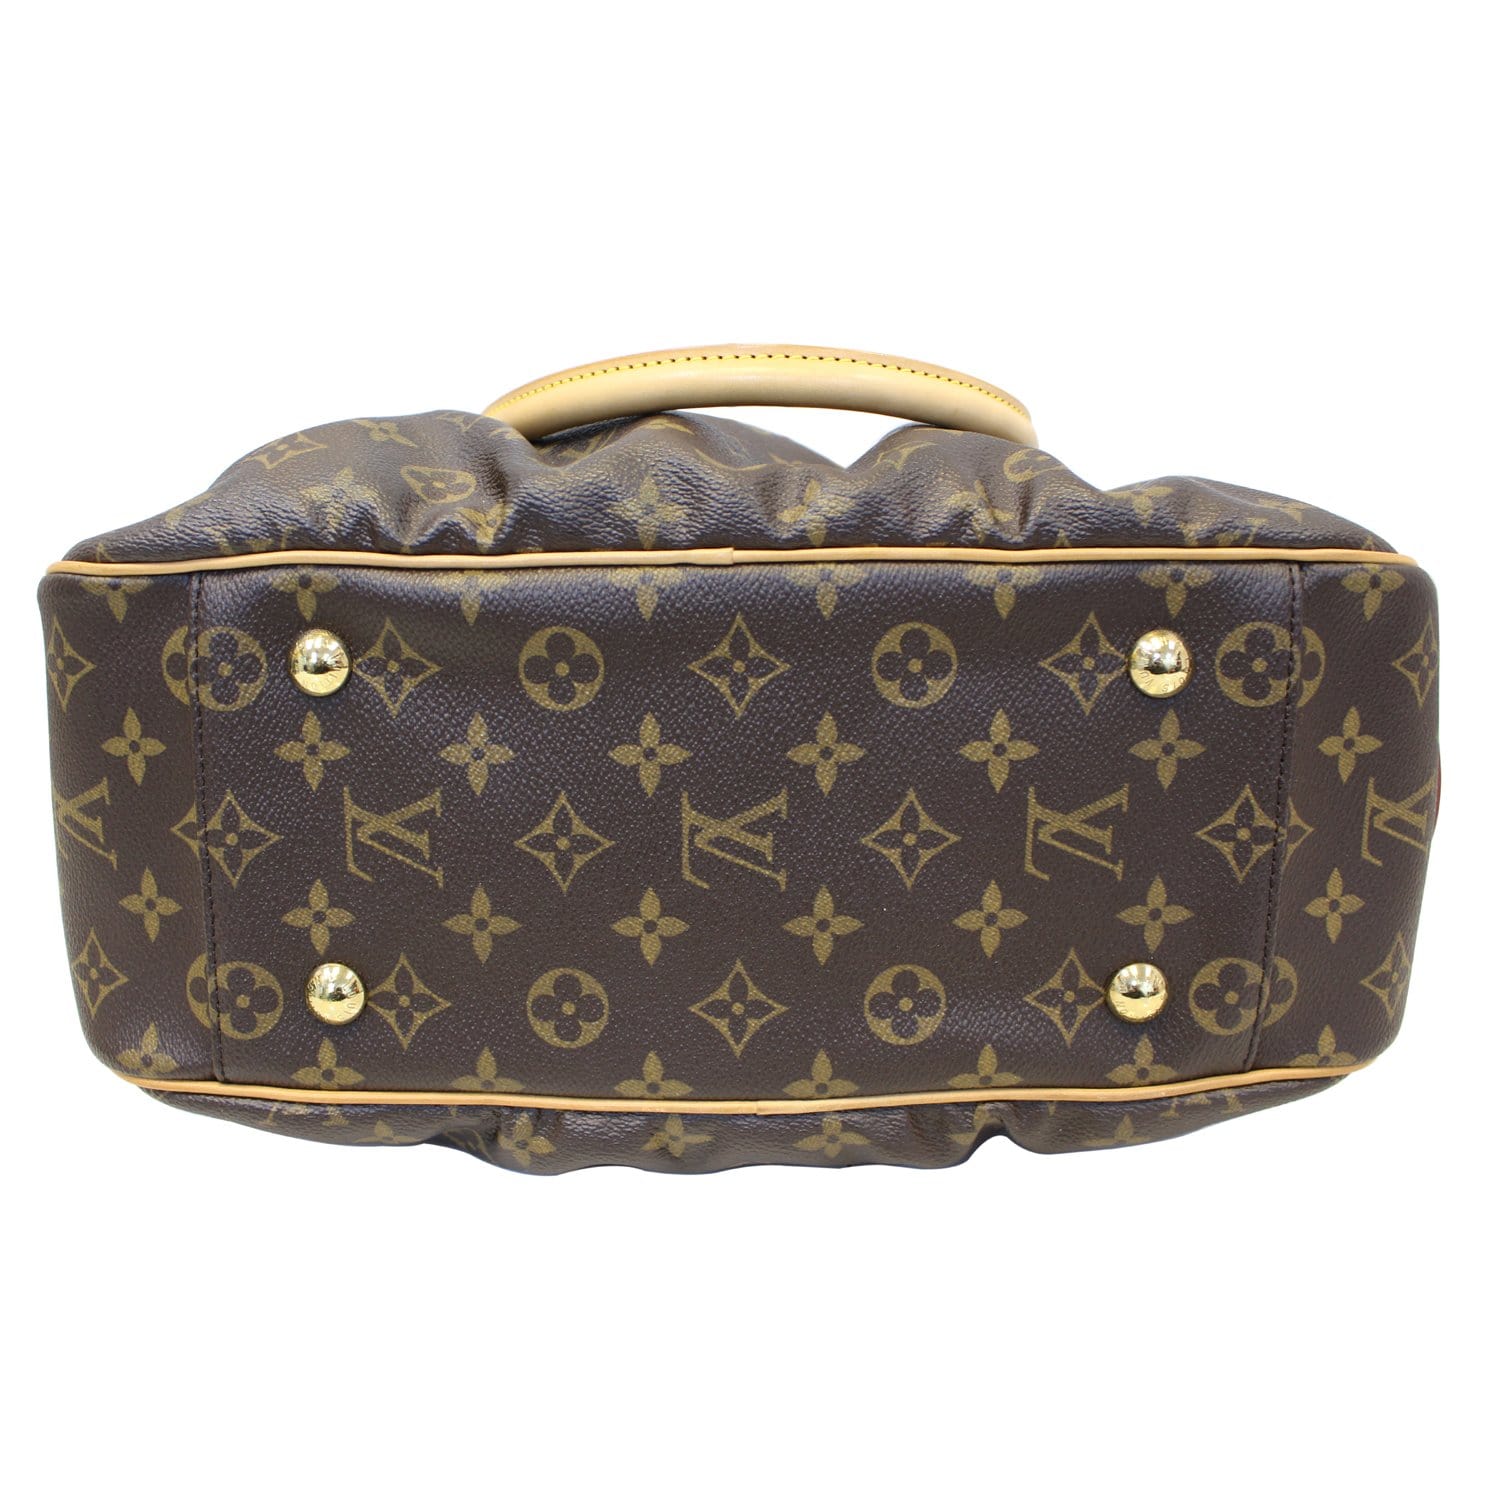 Louis Vuitton Mizi Monogram Canvas Handbag - Limited